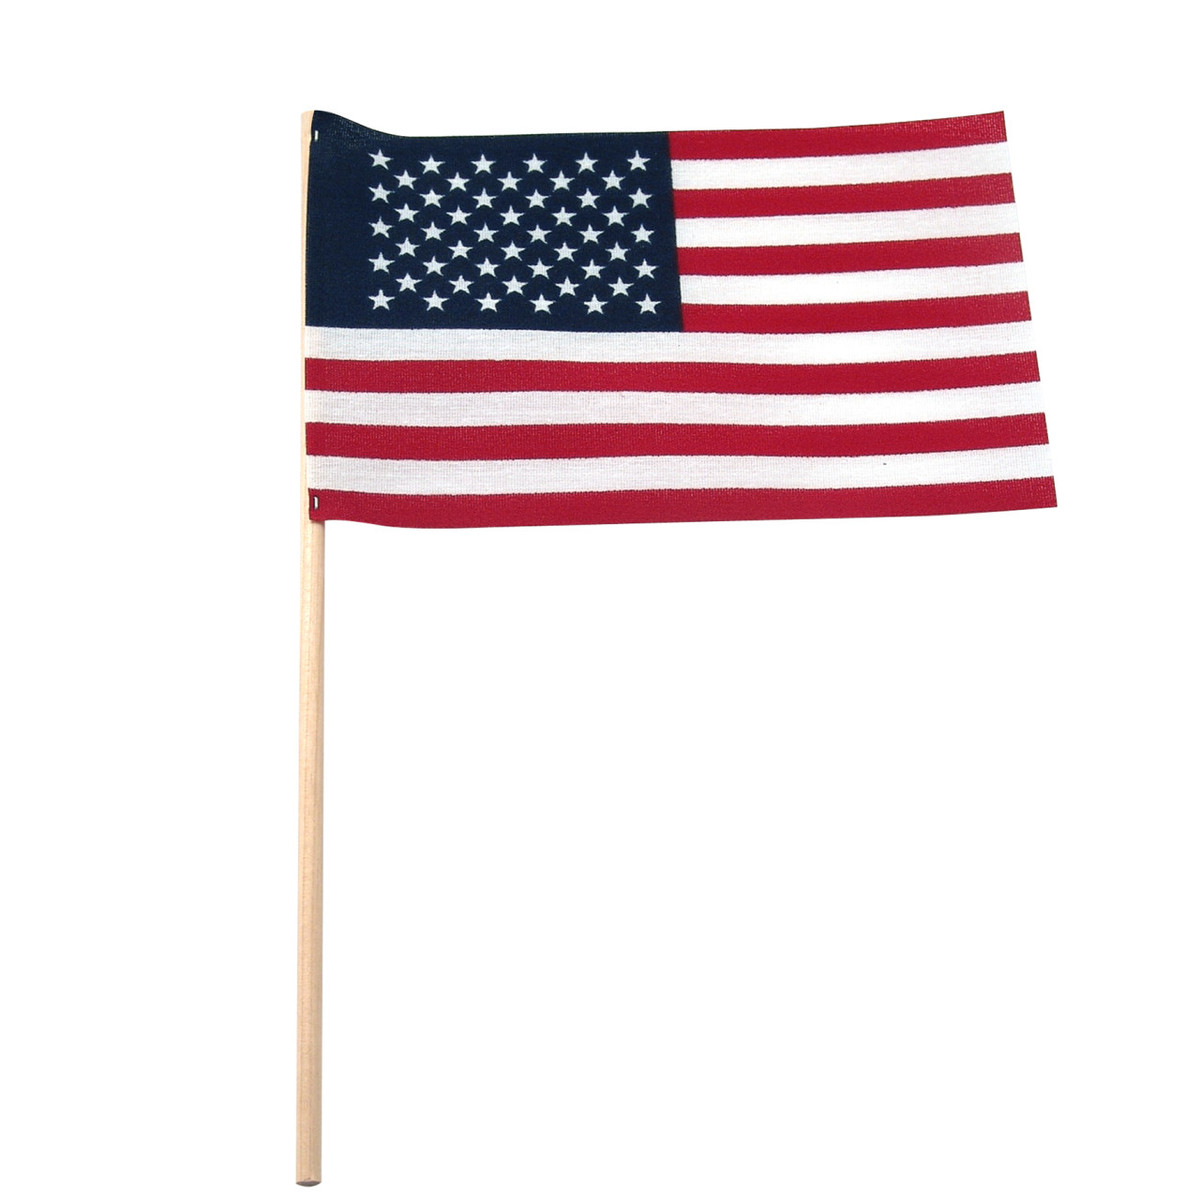 american flag transparent background